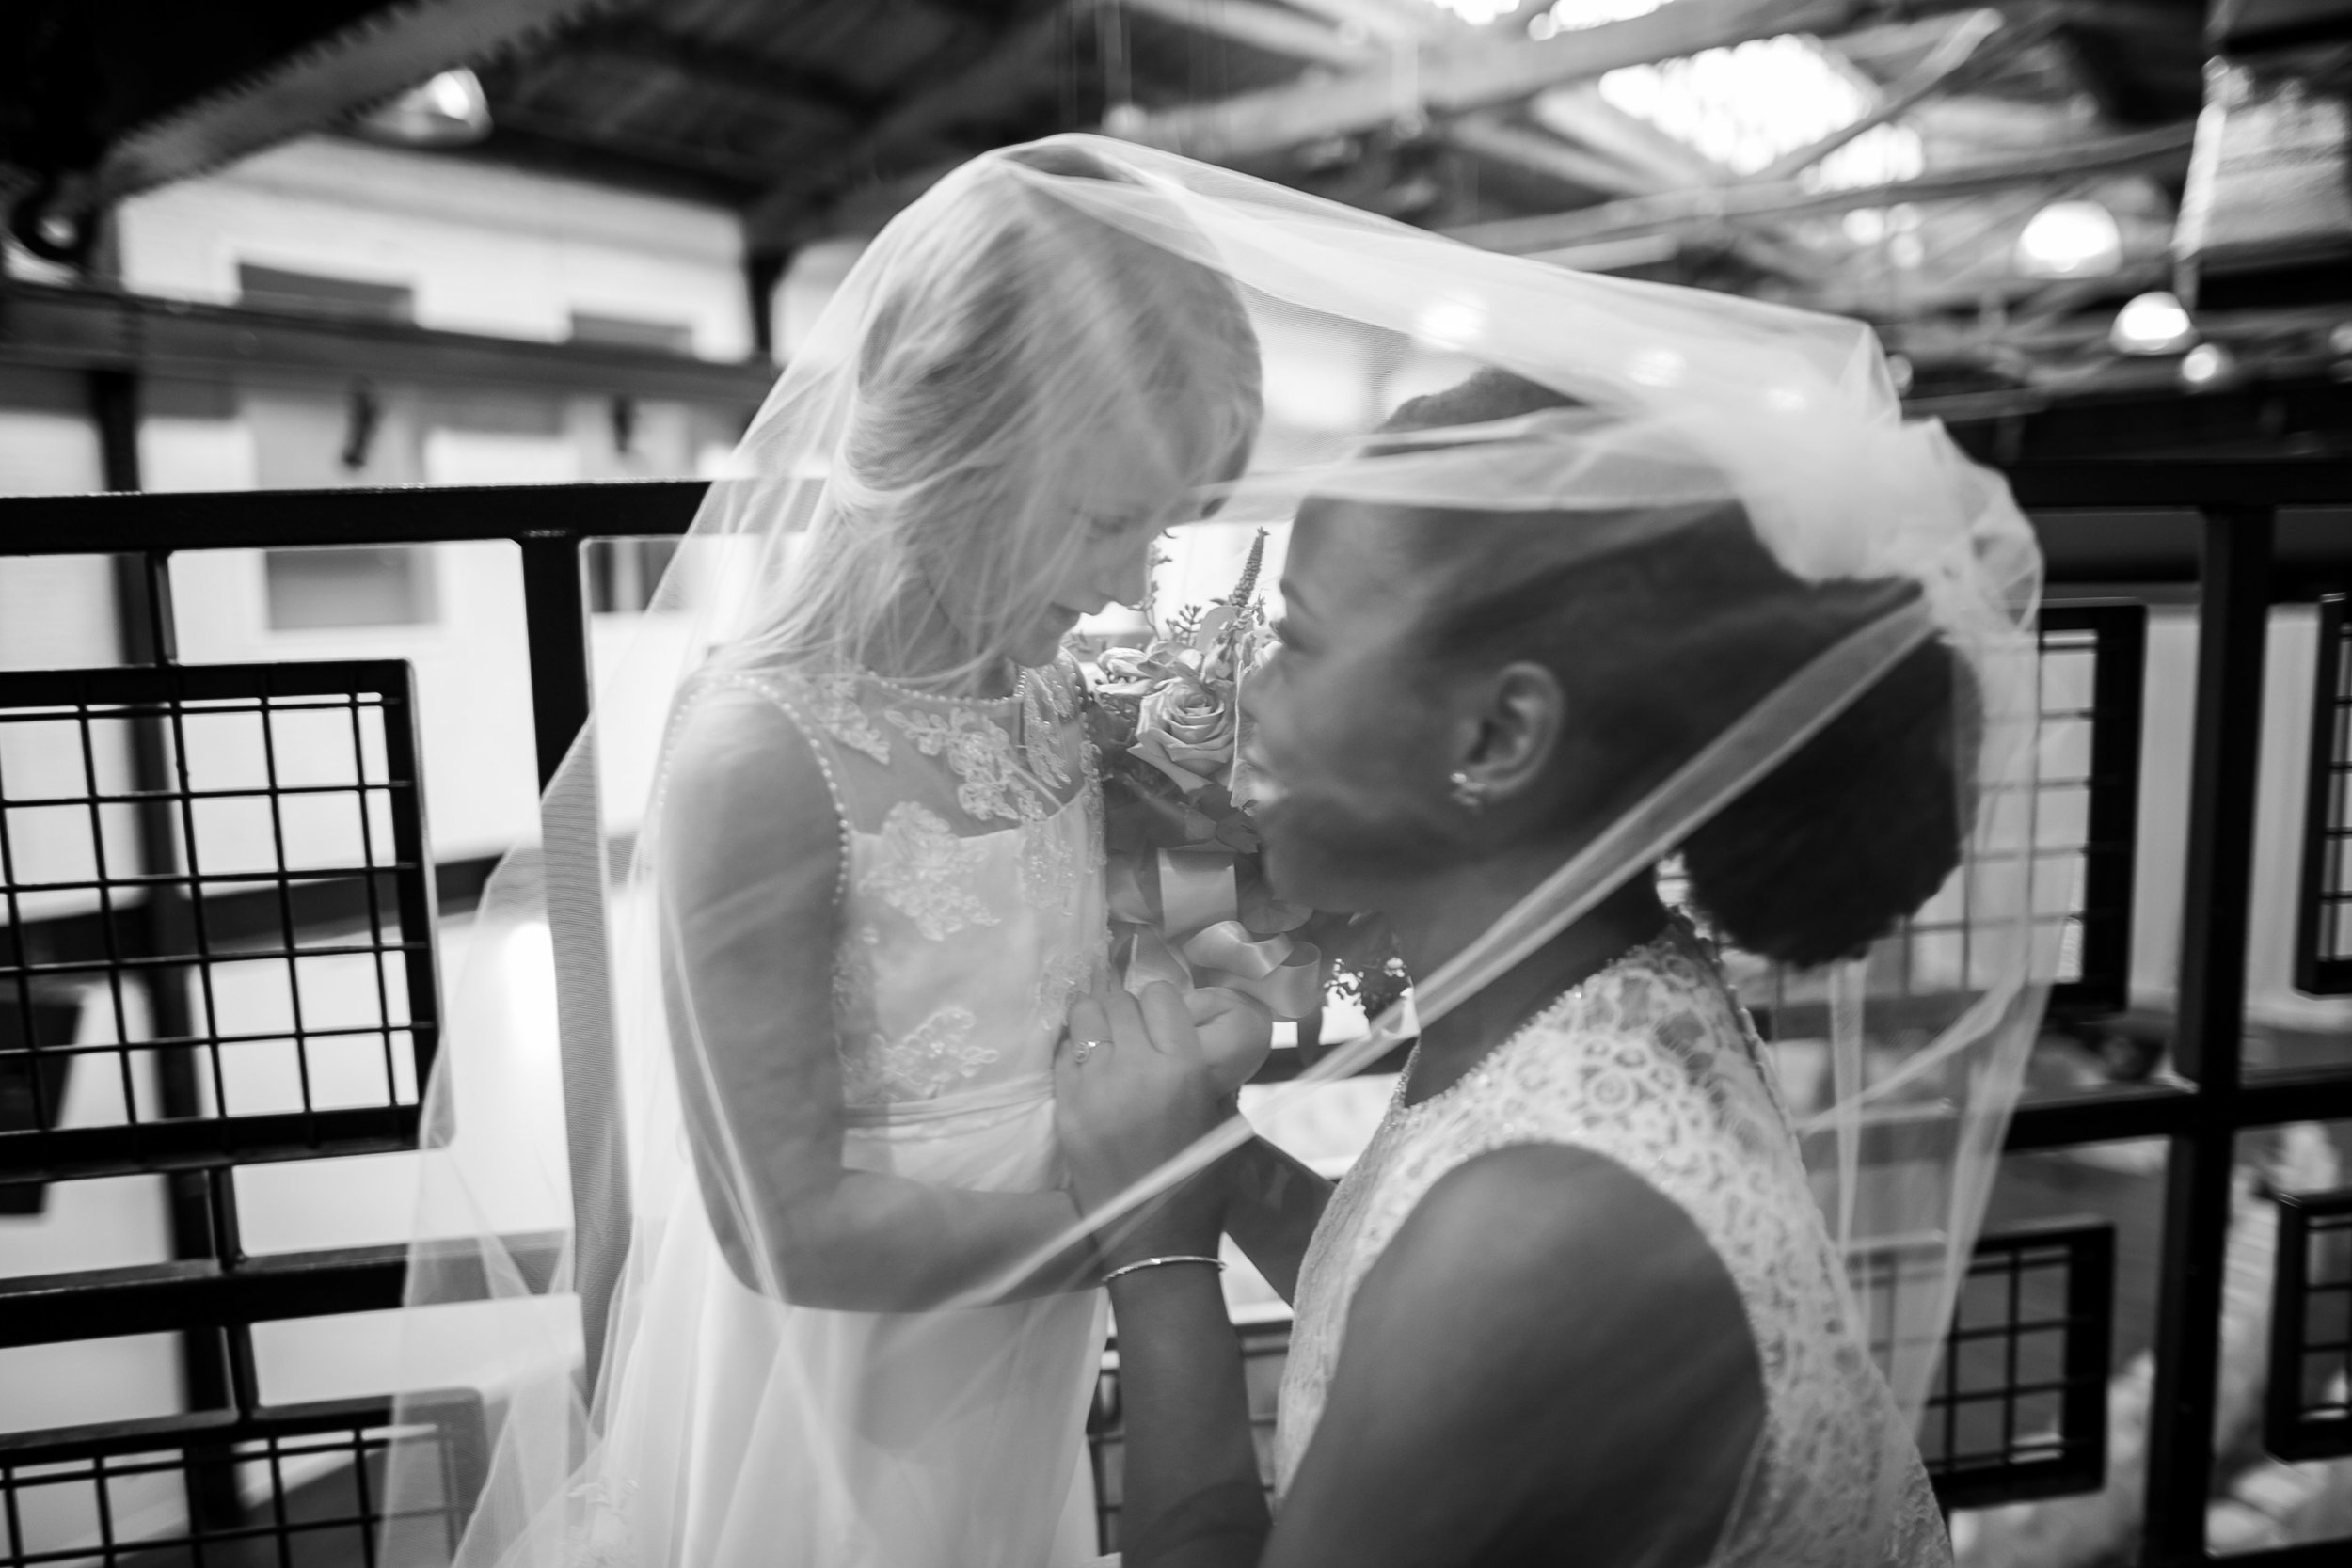  A Philadelphia Fishtown Skybox Wedding by Lesbian Photographer Swiger Photographer. &nbsp;Monet and Daniel - an industrial fall Philly Wedding 